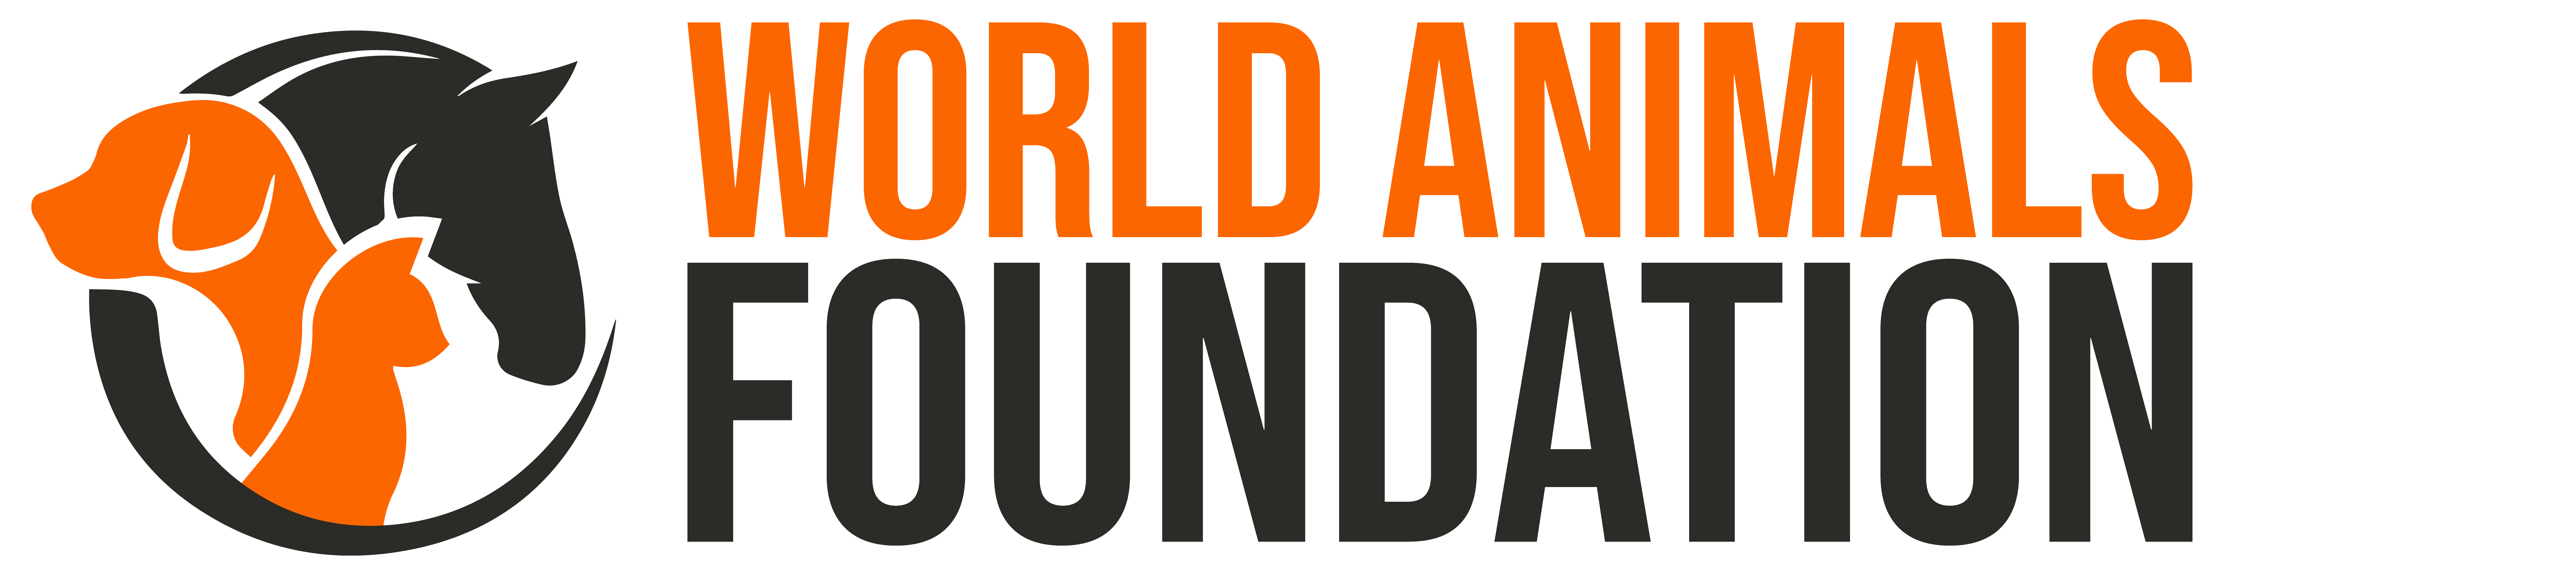 World Animals Foundation logo